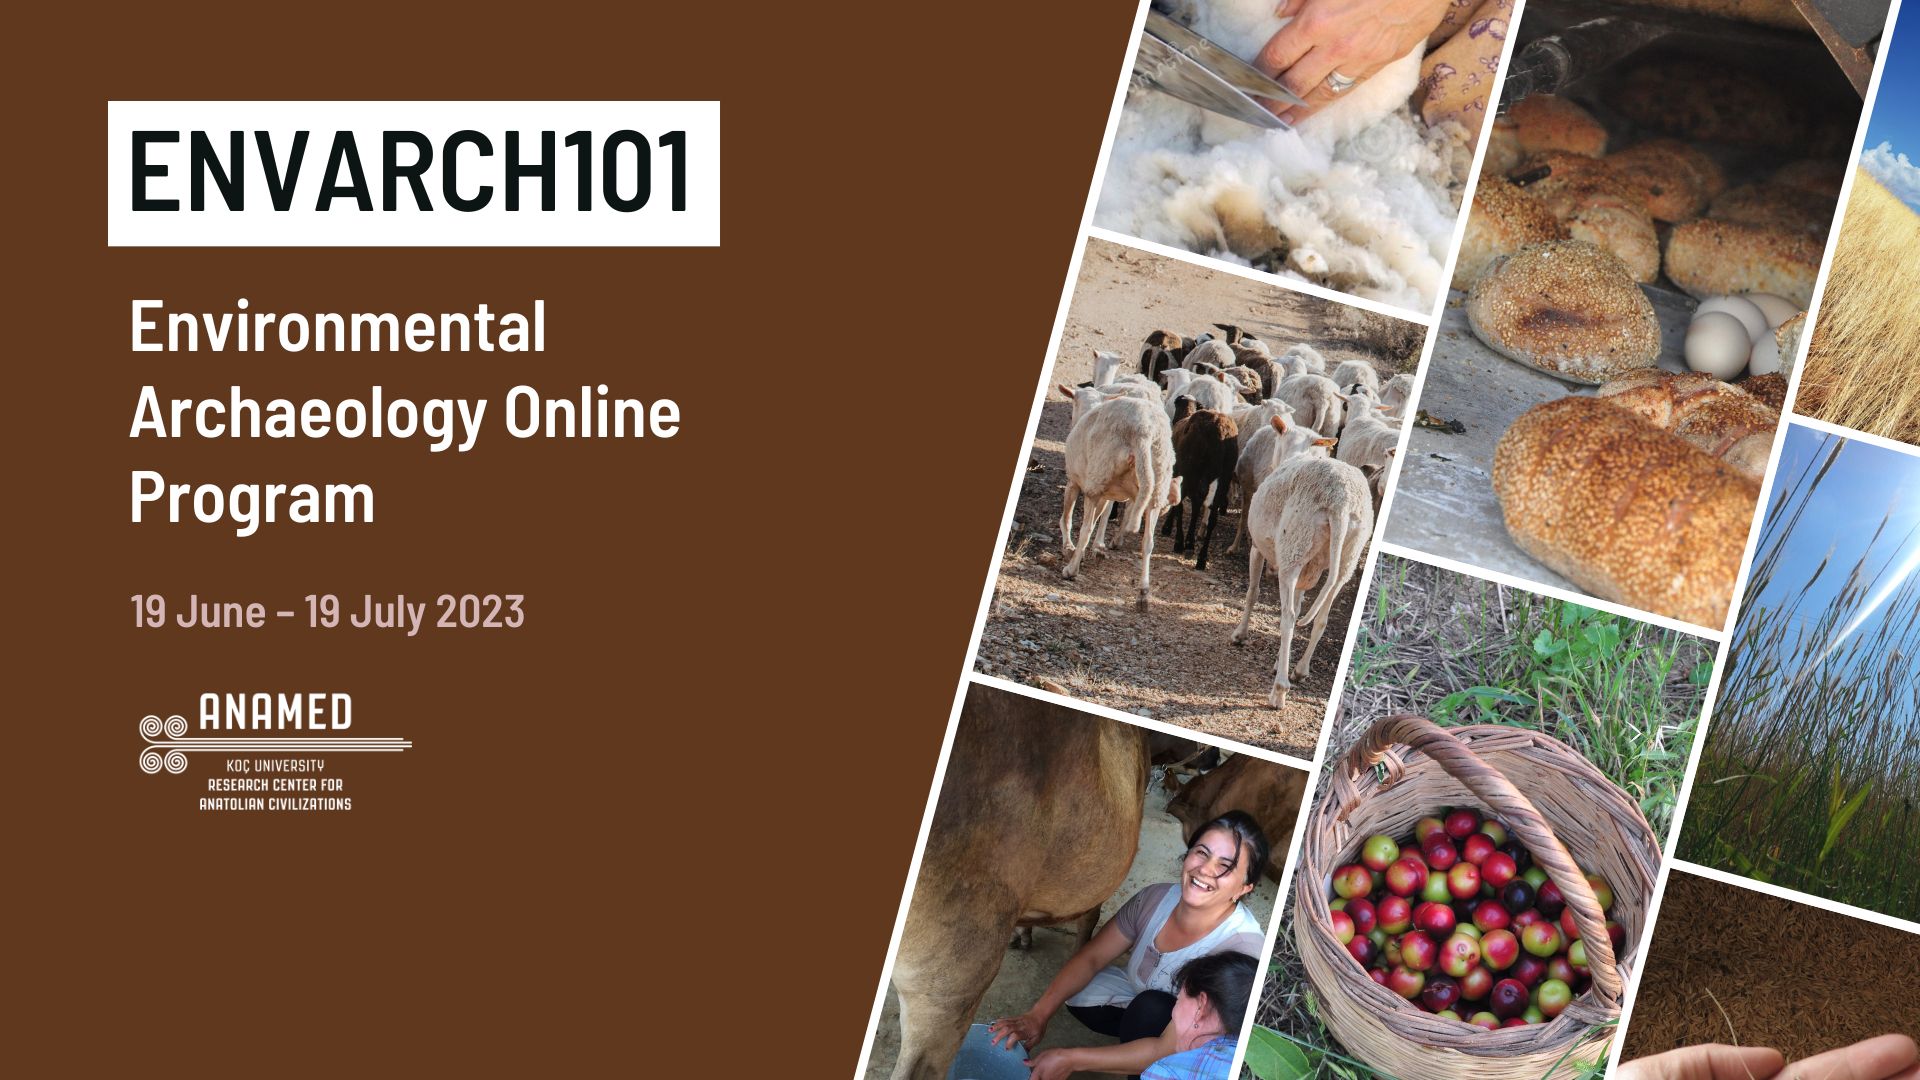 Environmental Archaeology Online Program ENVARCH101